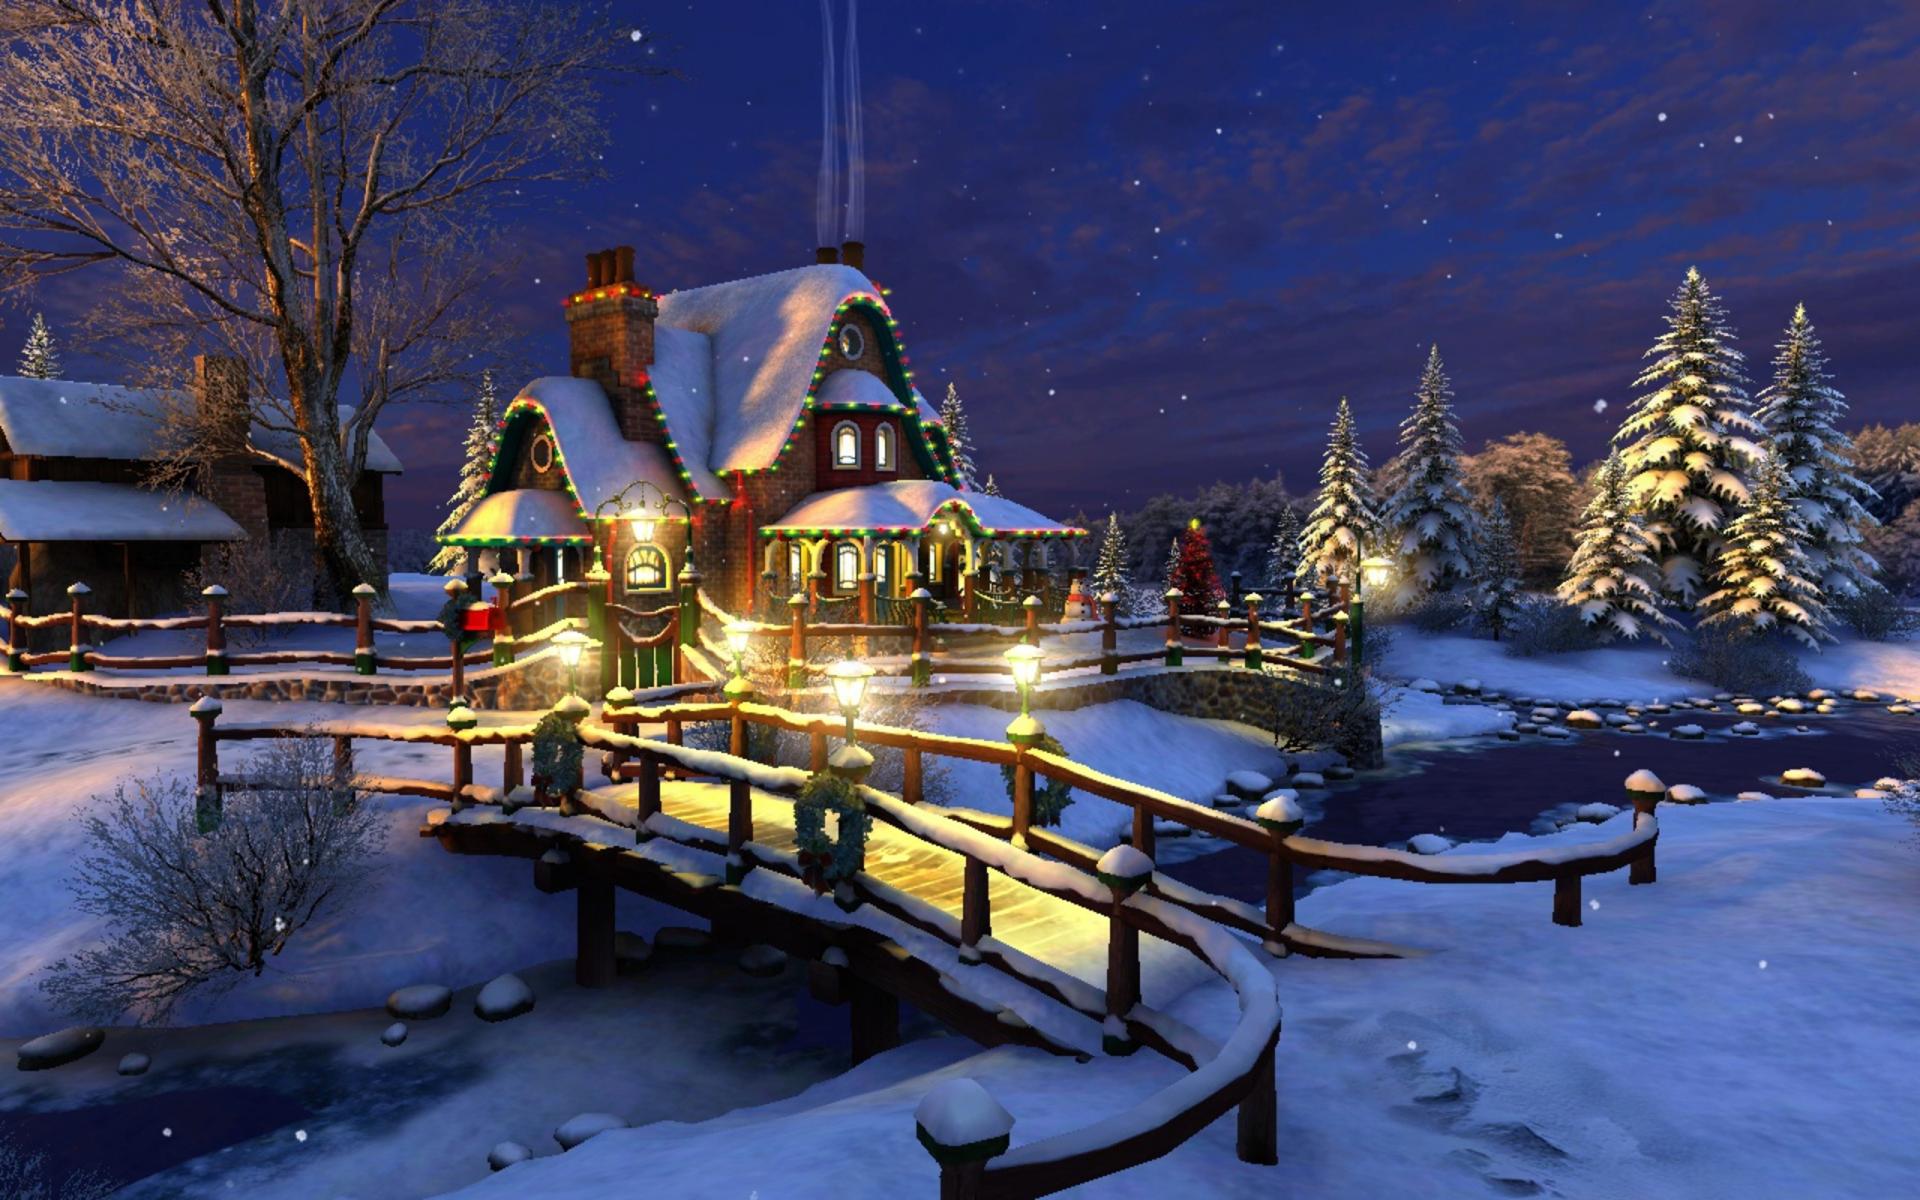 Holidays Christmas Seasonal Pictures For Desktop wallpaper